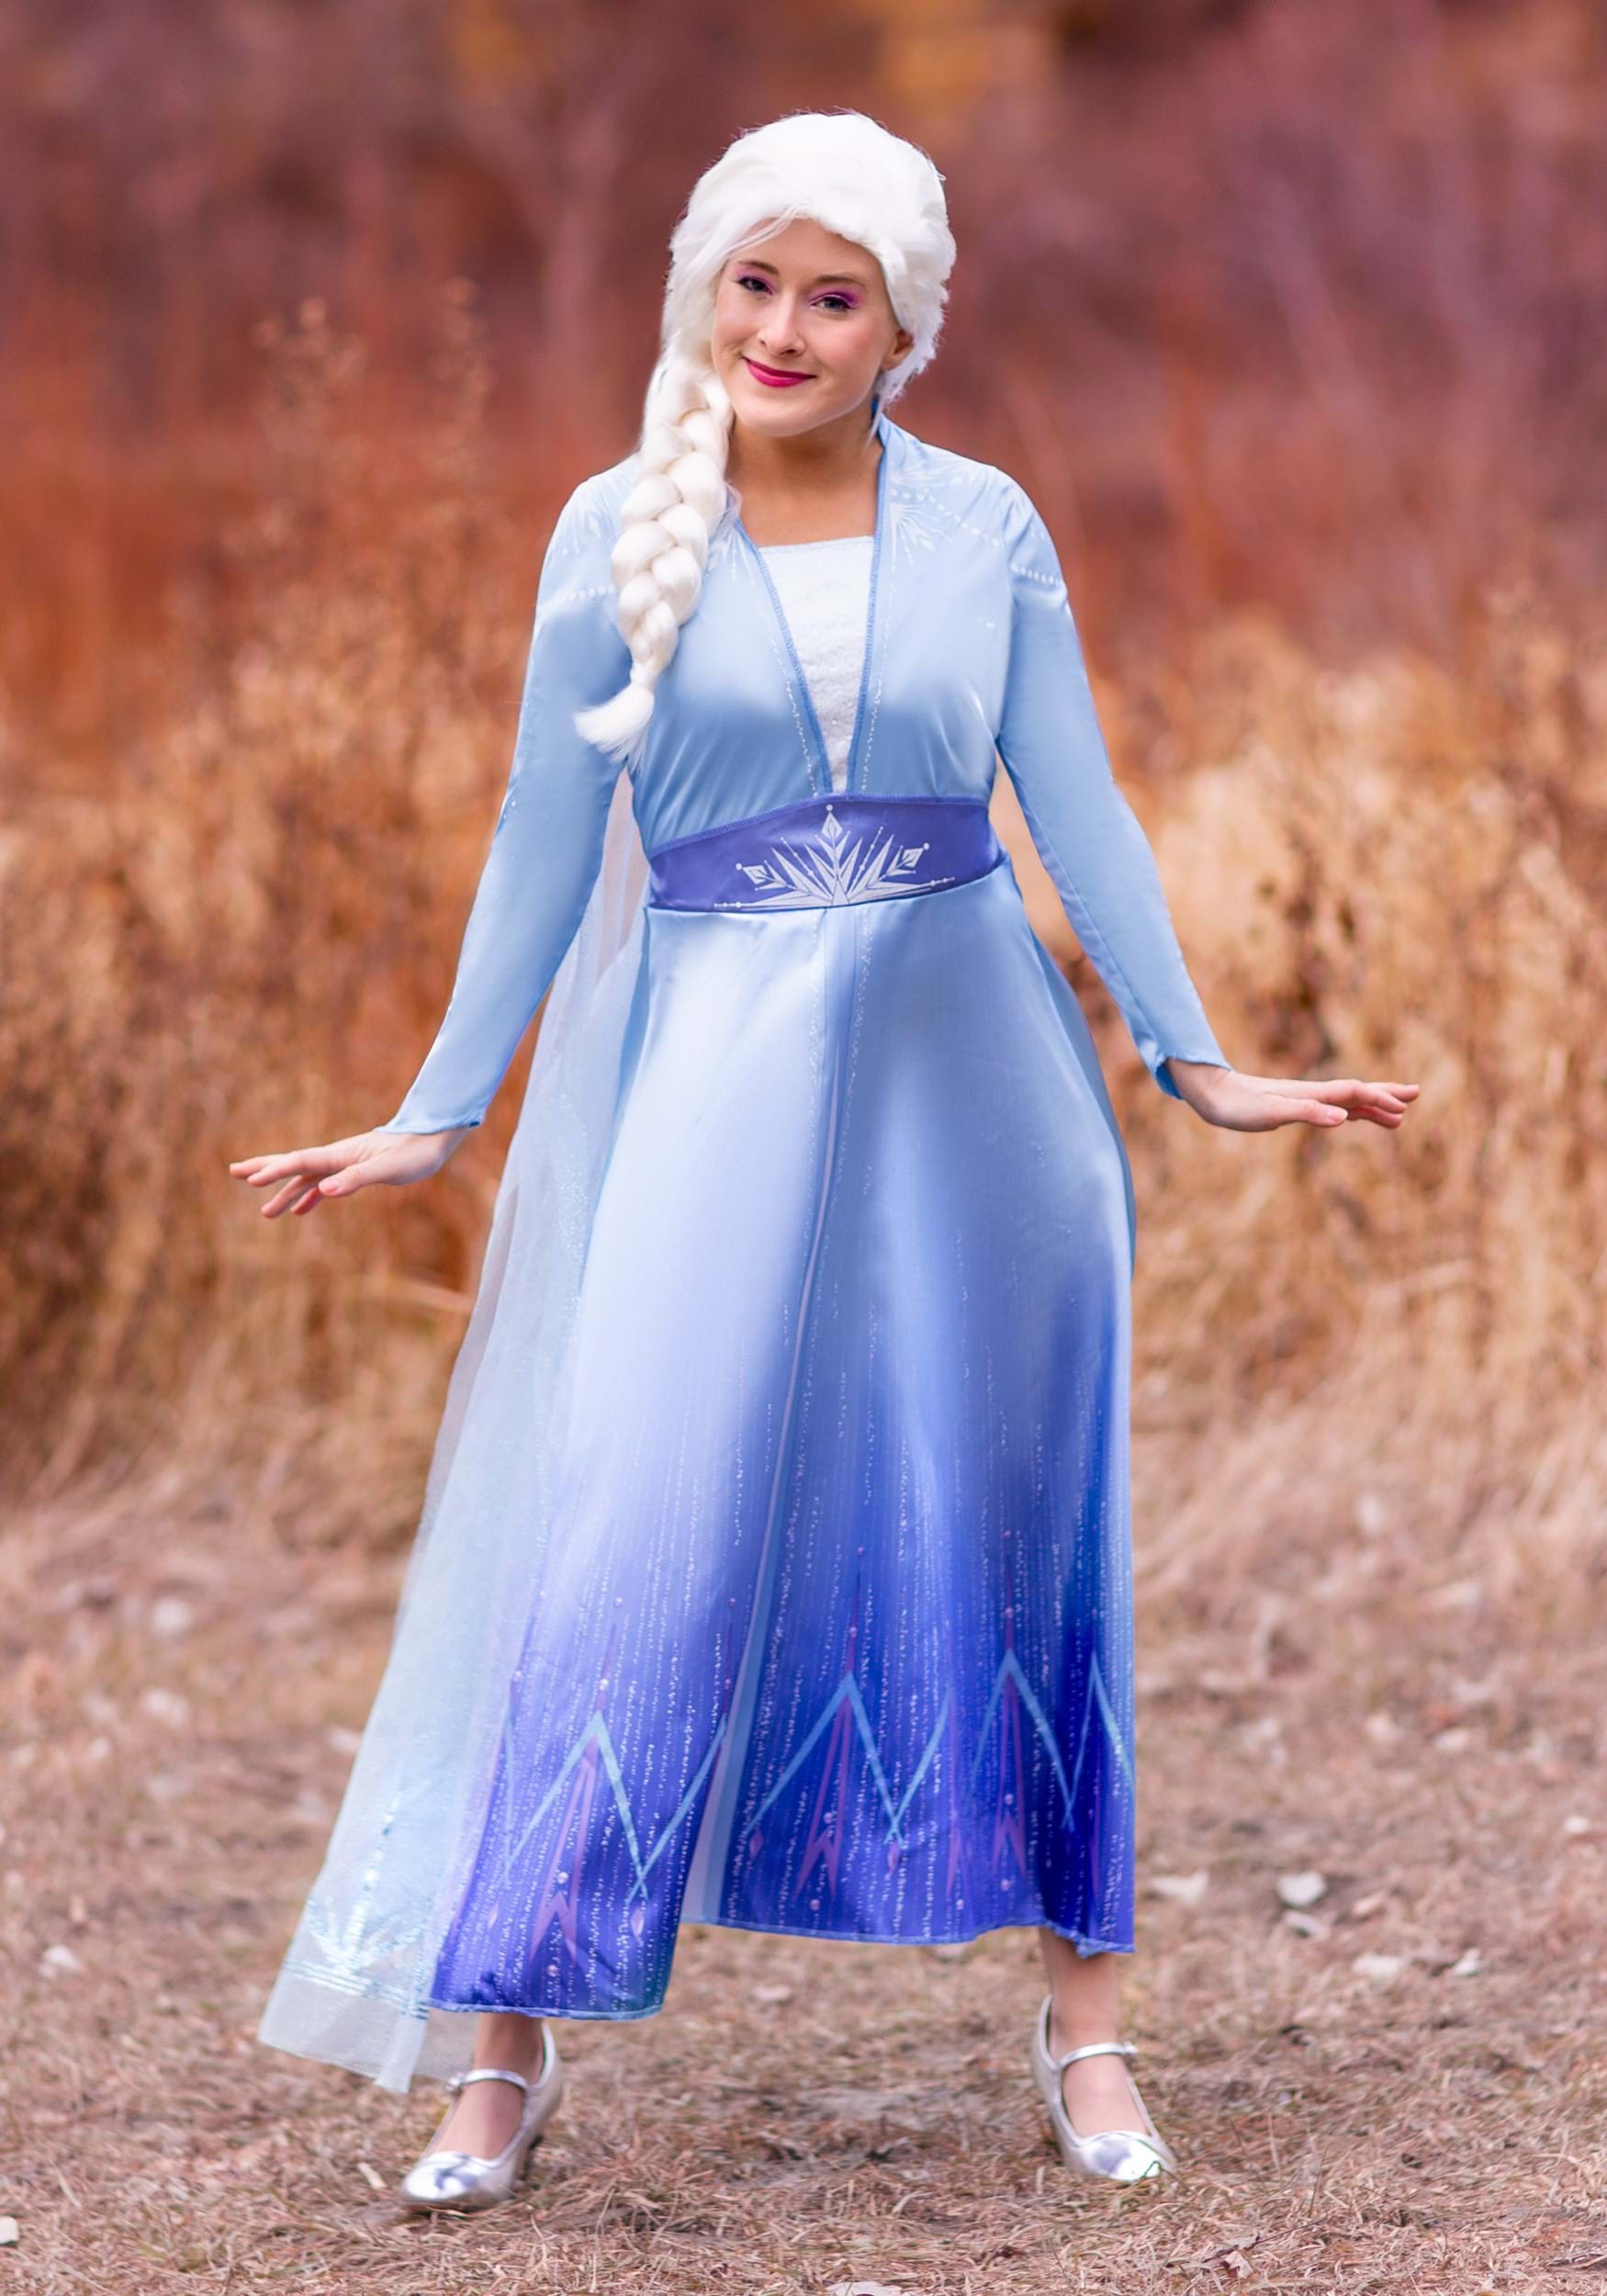 DIY Elsa Dress (From Frozen) - The Kim Six Fix